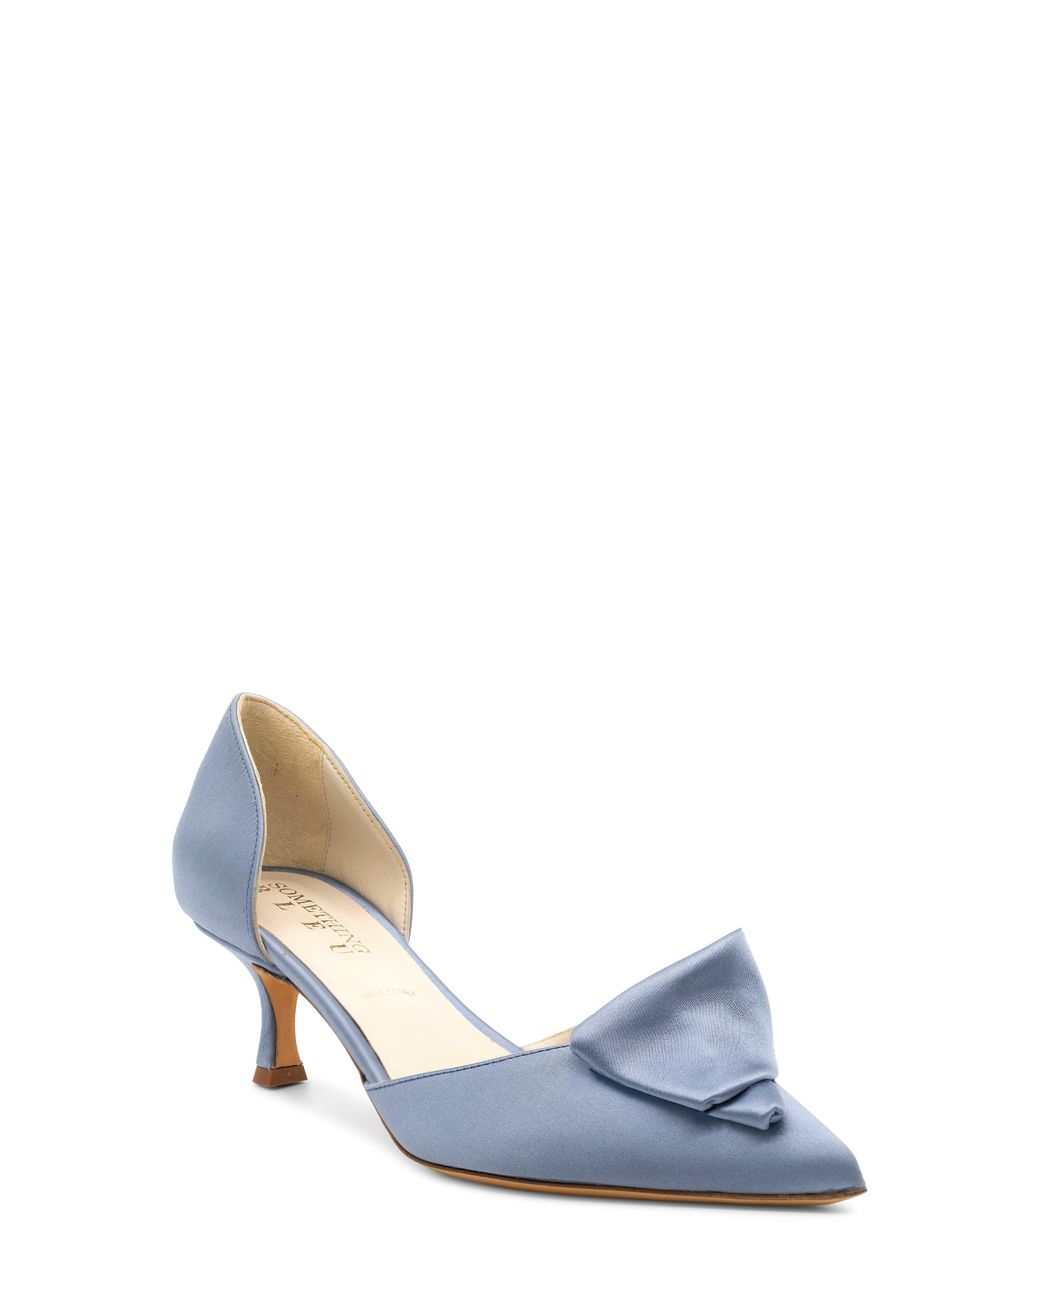 Something Bleu Sadie D'orsay Pointed Toe Pump in White | Lyst